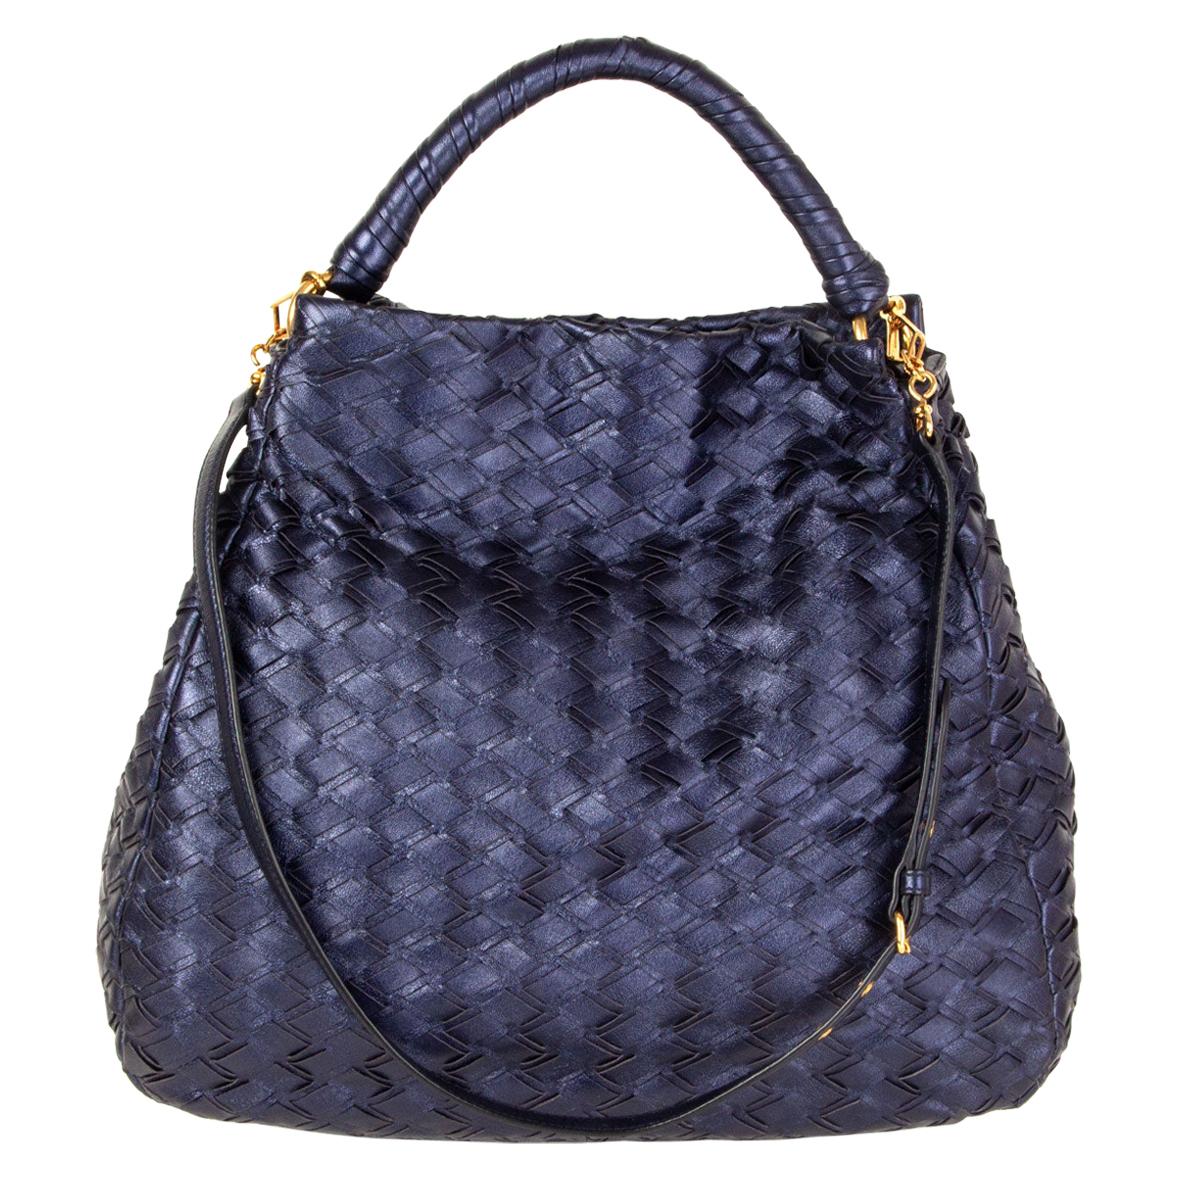 MIU MIU metallic blue leather WOVEN HOBO Shoulder Bag